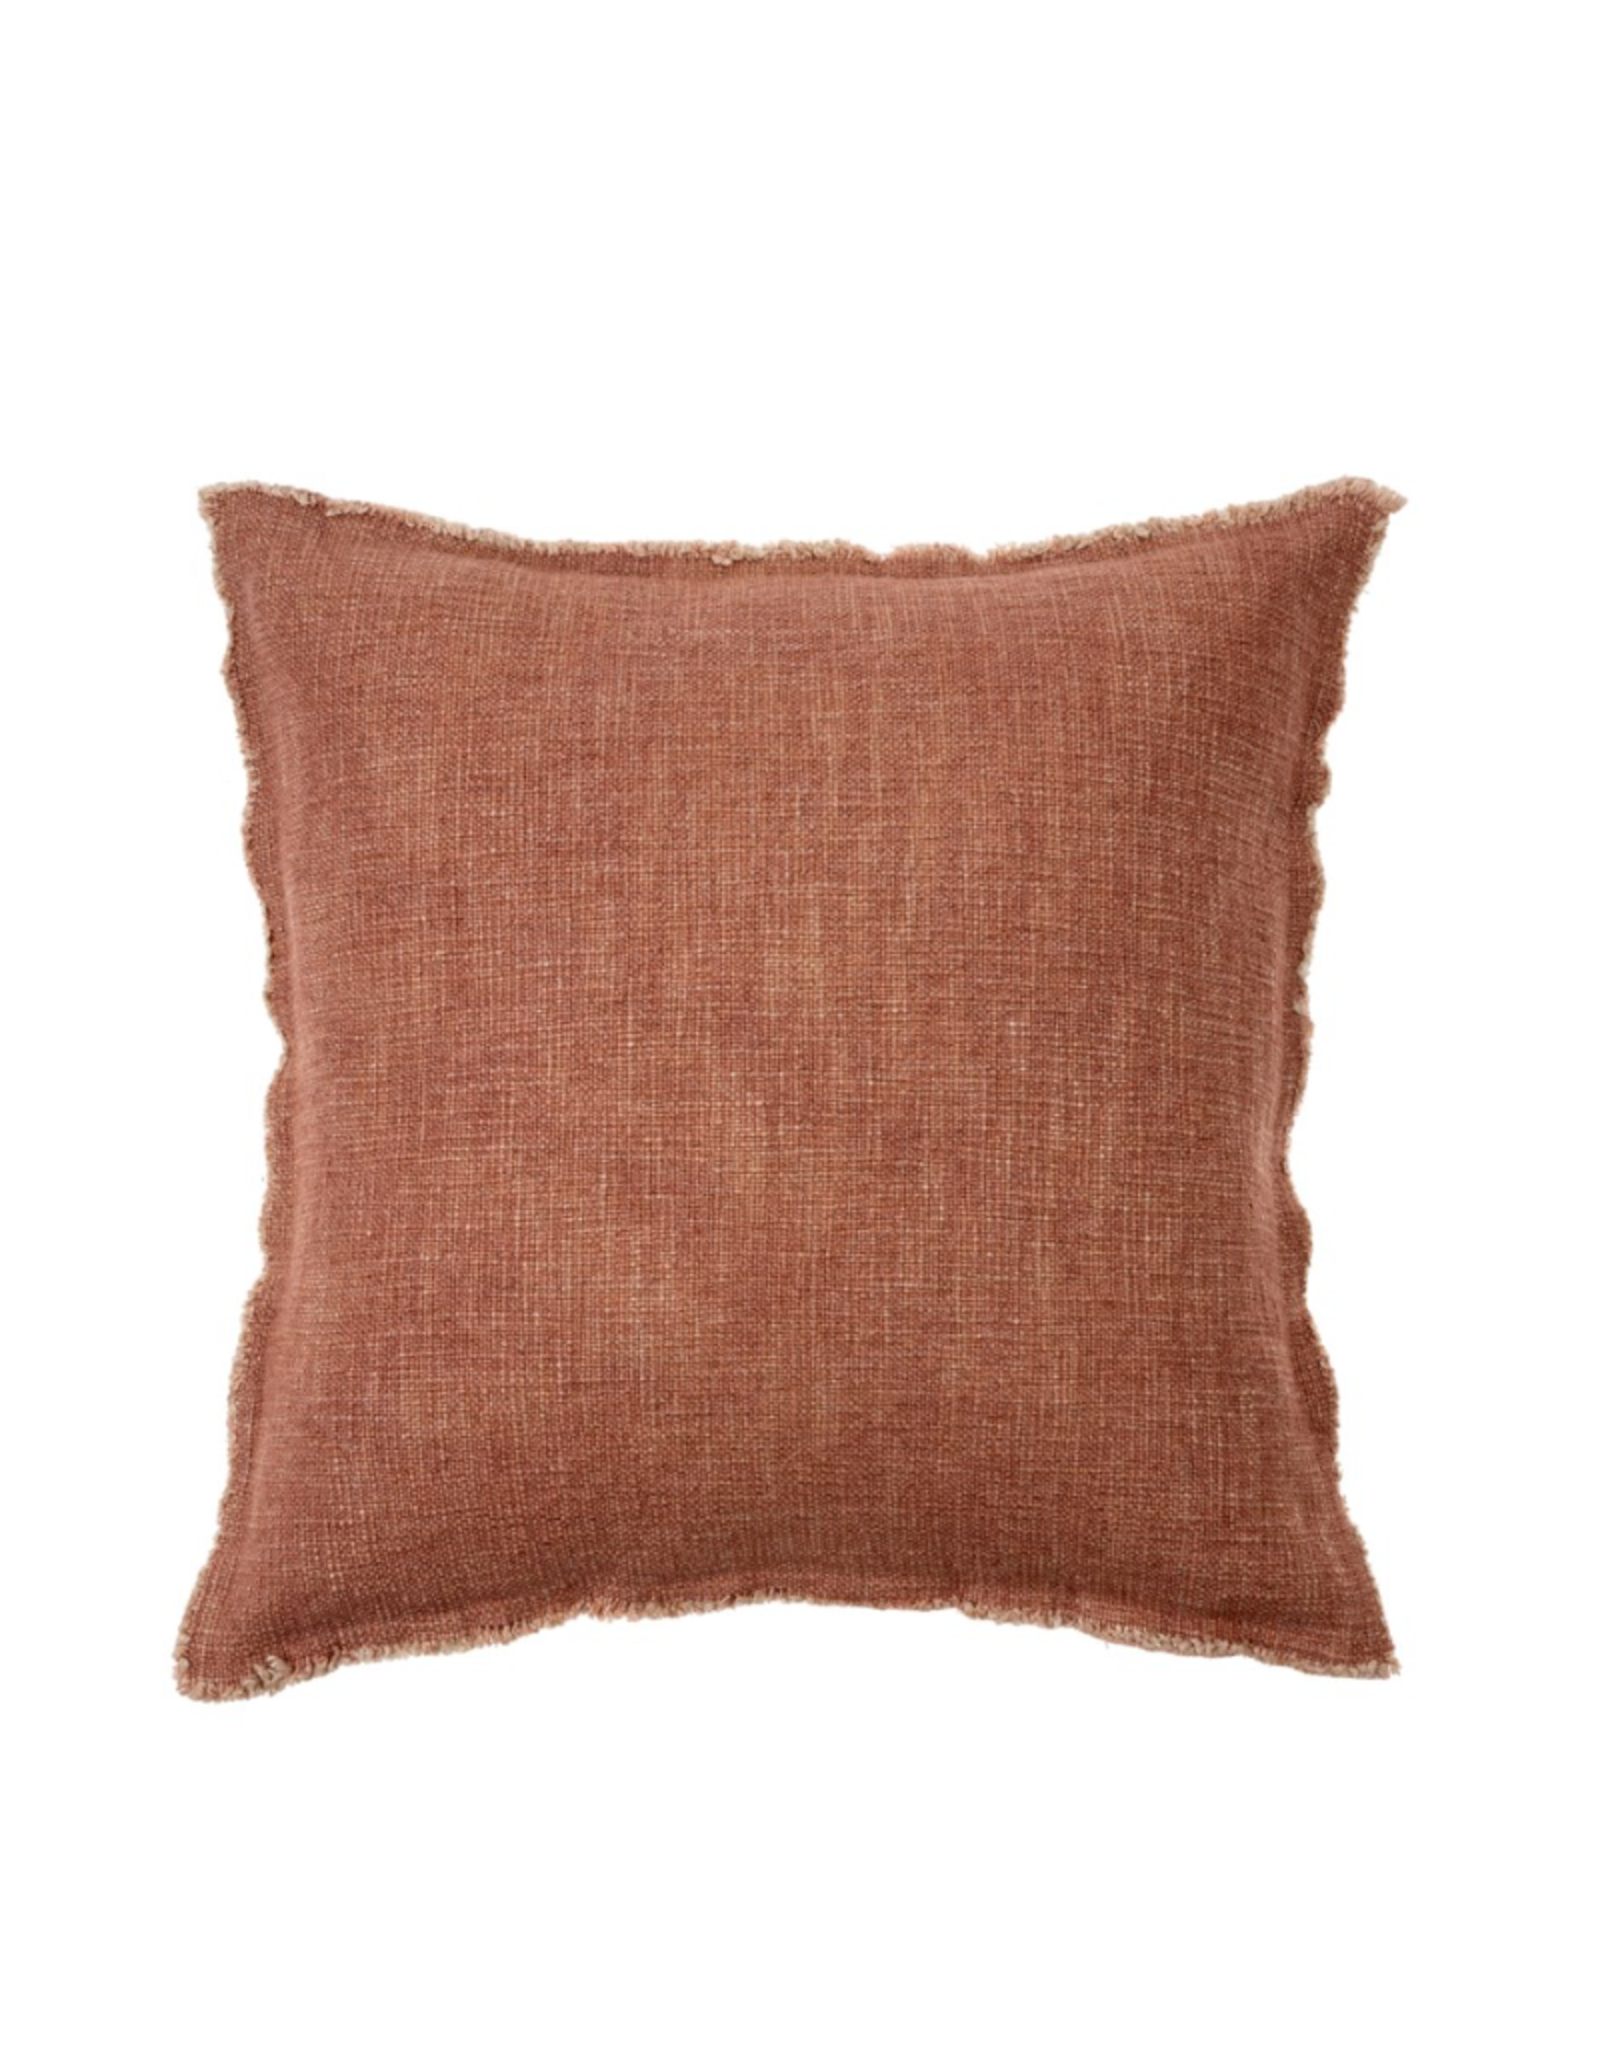 Indaba Cushions Indaba Selena Linen Brick 20 x 20 1-3196-C